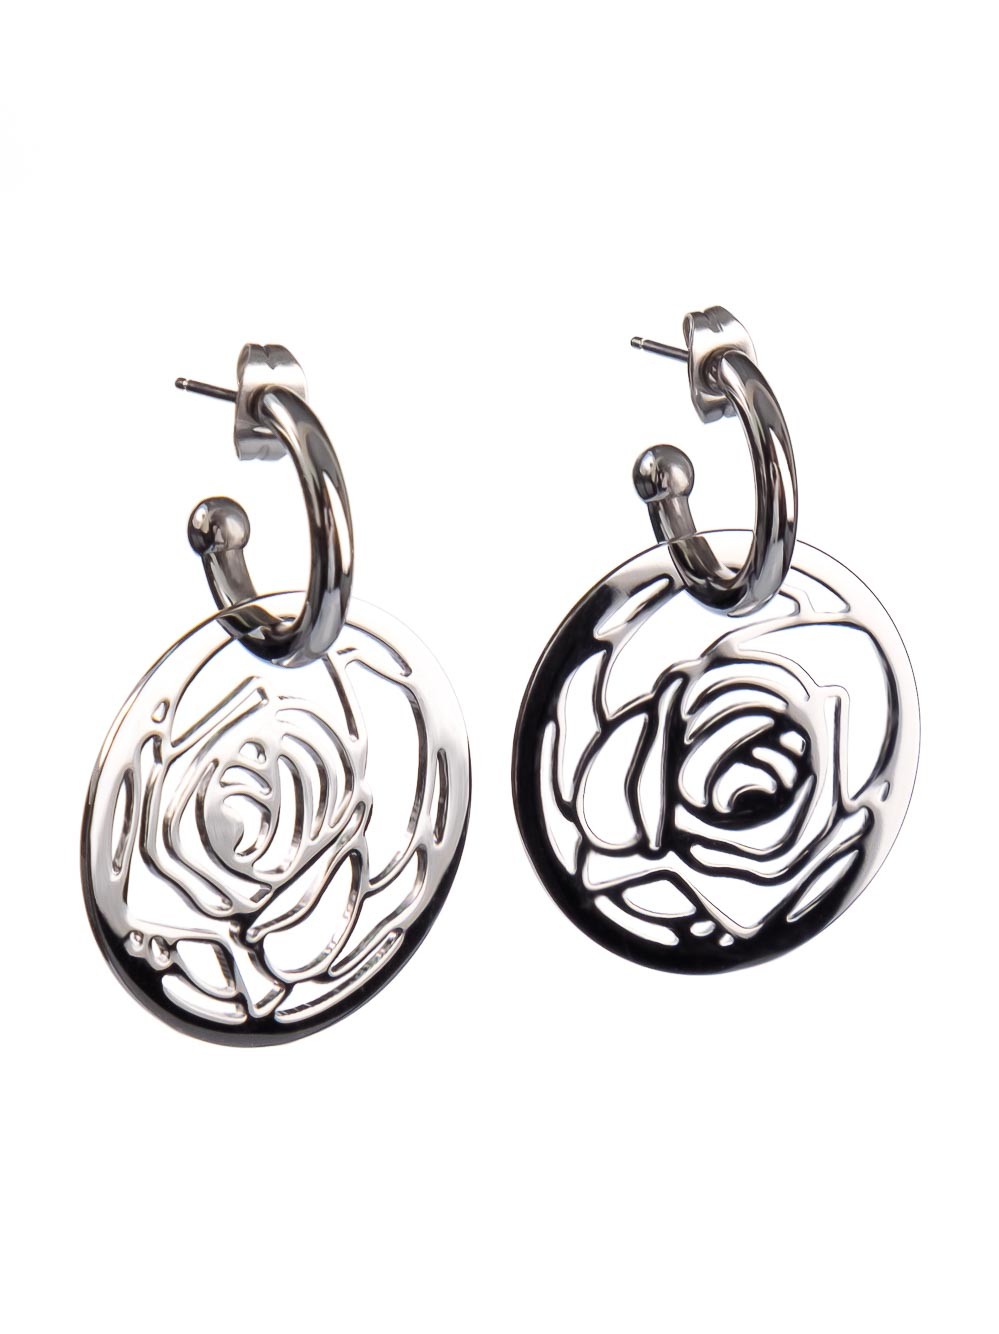 CREOLE DARLING ROSE - Bettencourt Creative Jewellery